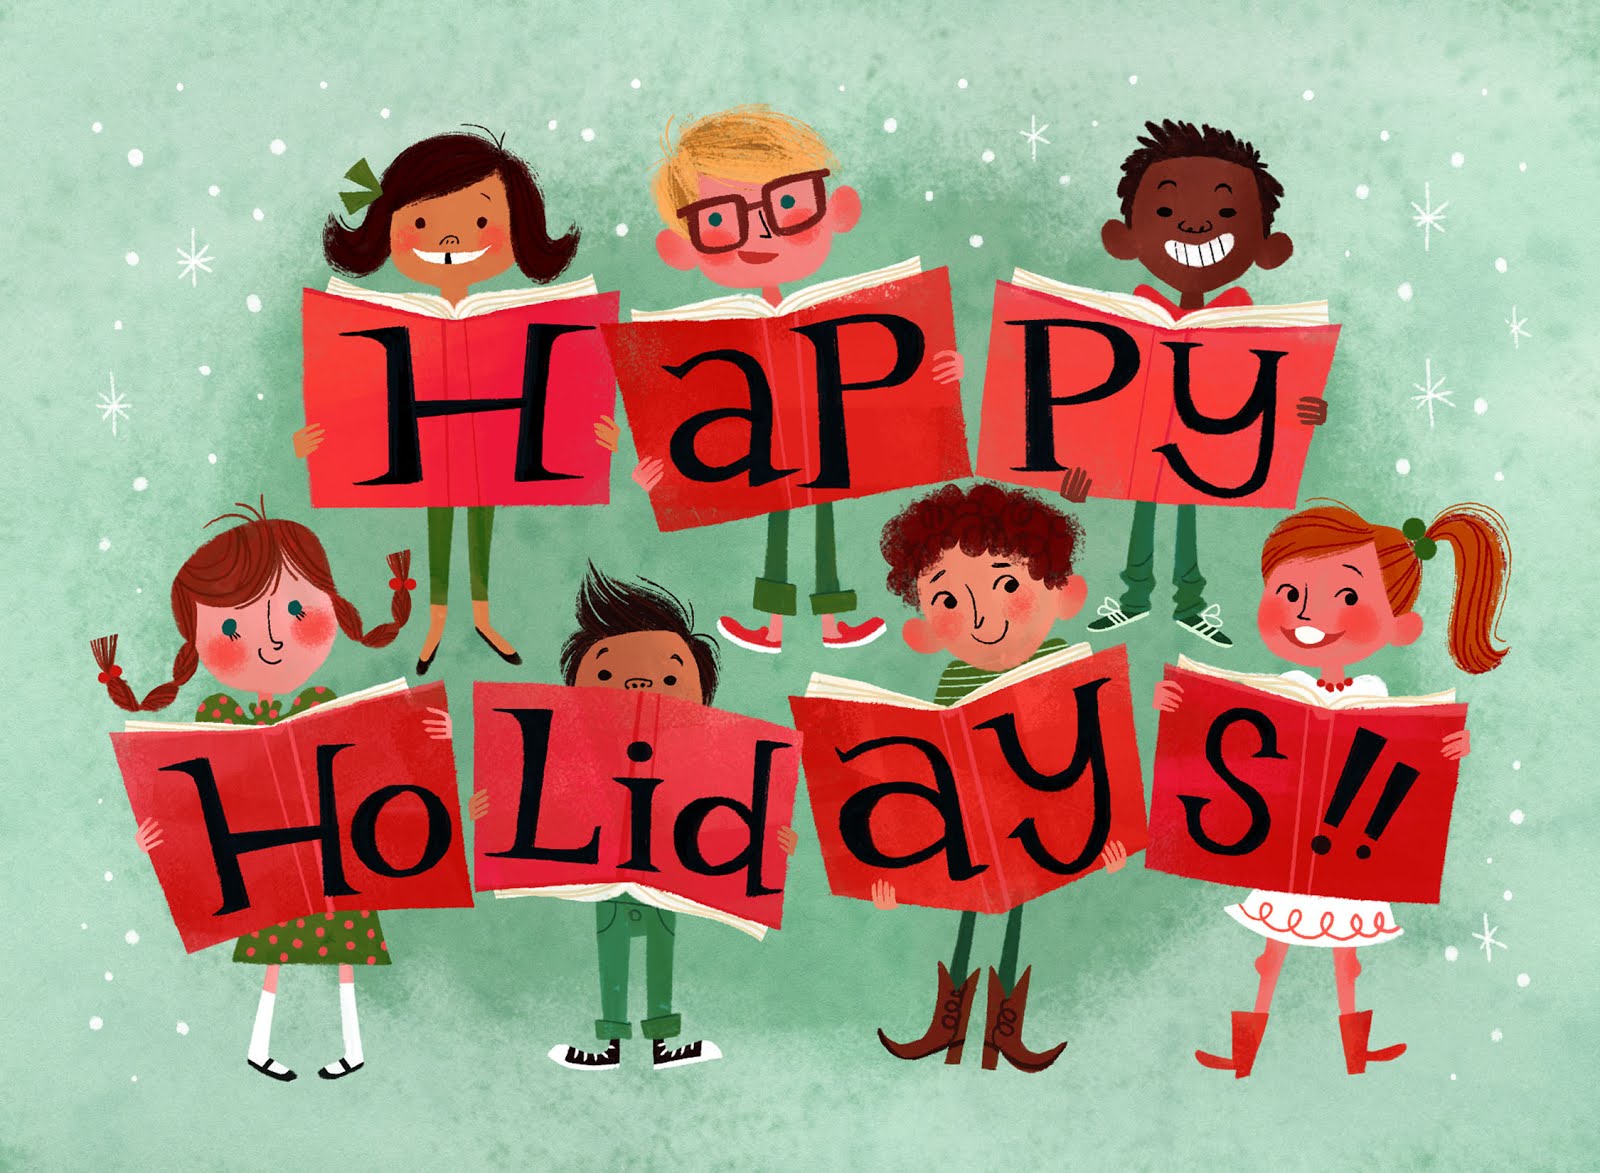 Were you happy at school. Happy Holidays картинки. Картинка рисунок Happy Holiday. Happy Holi. Надпись Хэппи Холидей.